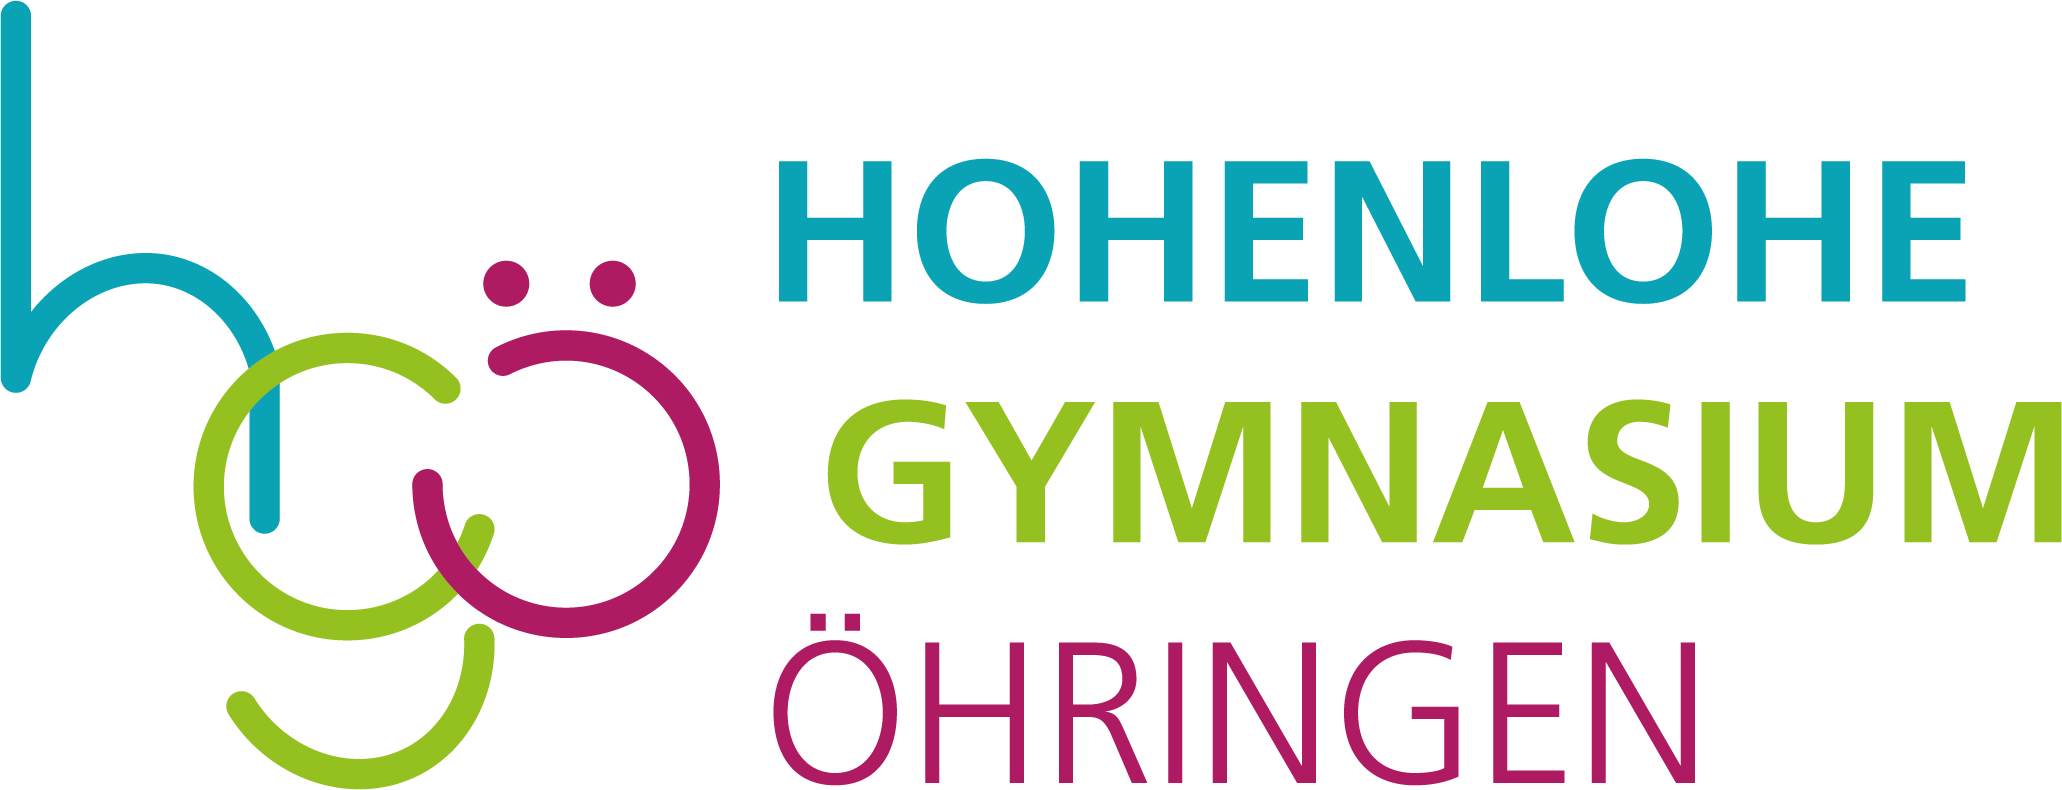 Hohenlohe-Gymnasium-Öhringen